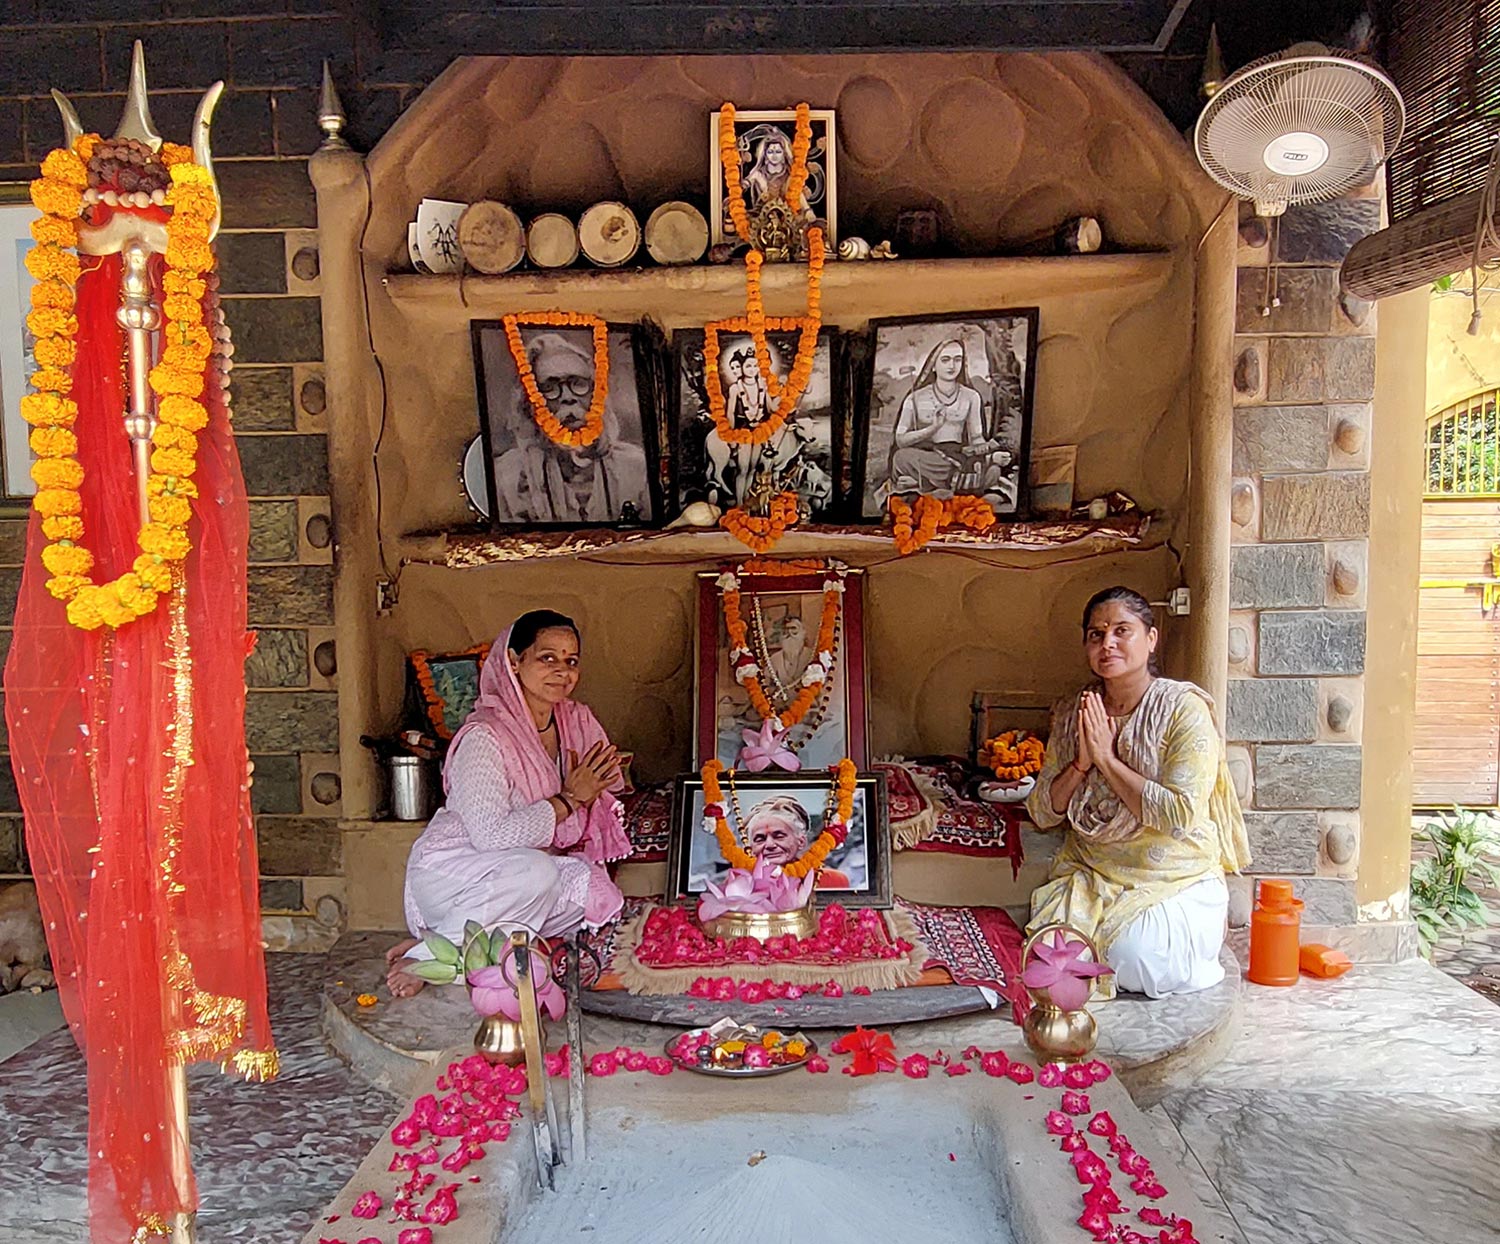 yoganga.org - Guru Purnima - yoganaga retreat at sri santosh puri ashram, full moon celebration in honour of our gurus: Santosh Puri Babaji and Narvada Puri Mataji